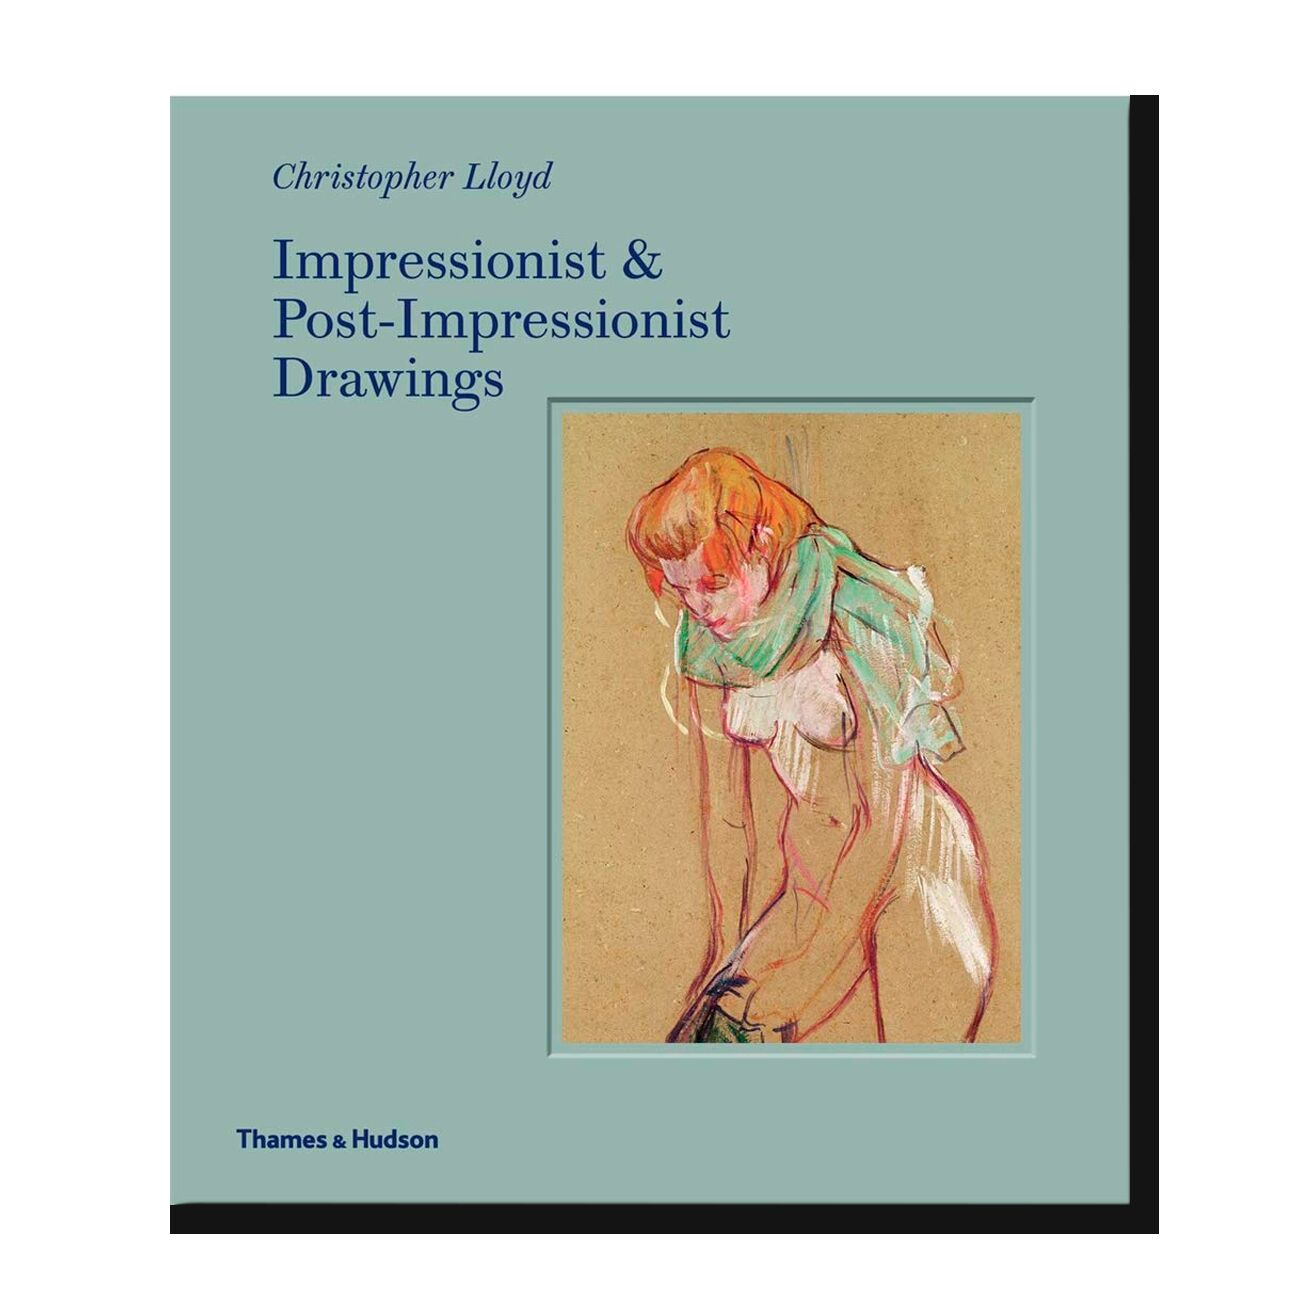 Impressionist and Postimpressionist Drawing